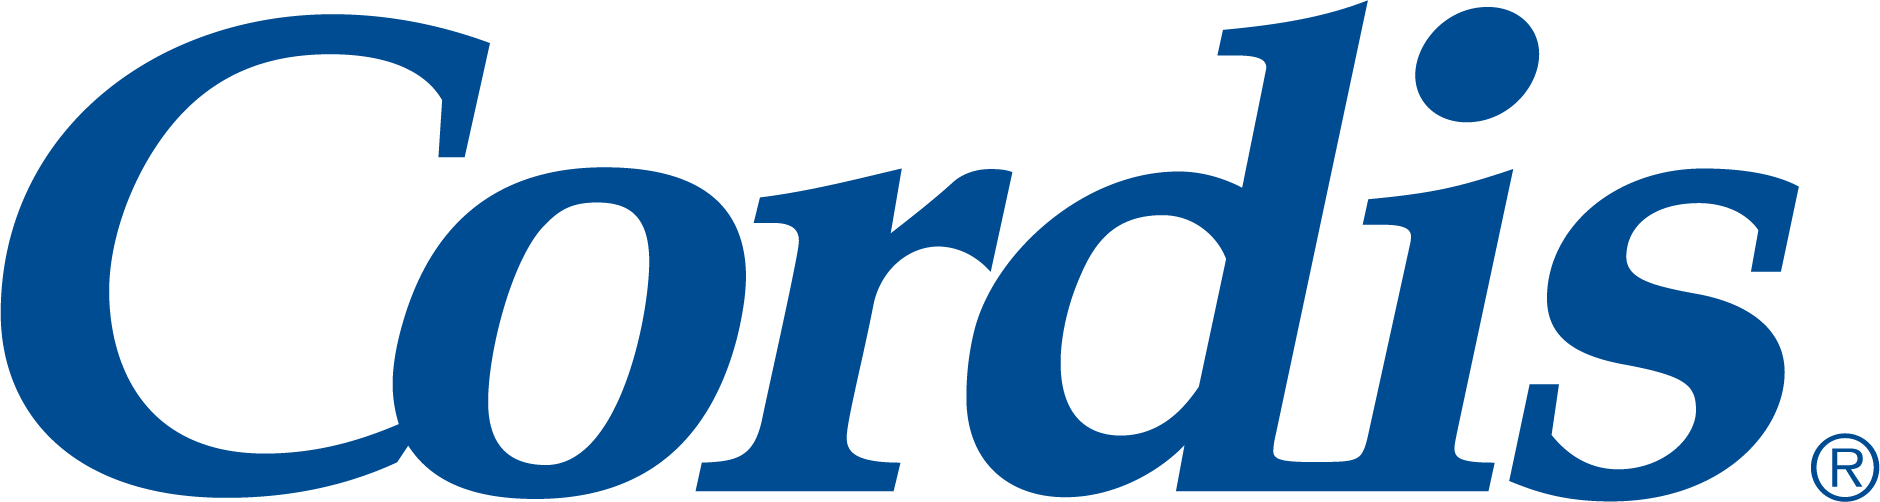 Cordis Corporation 2013 Logo